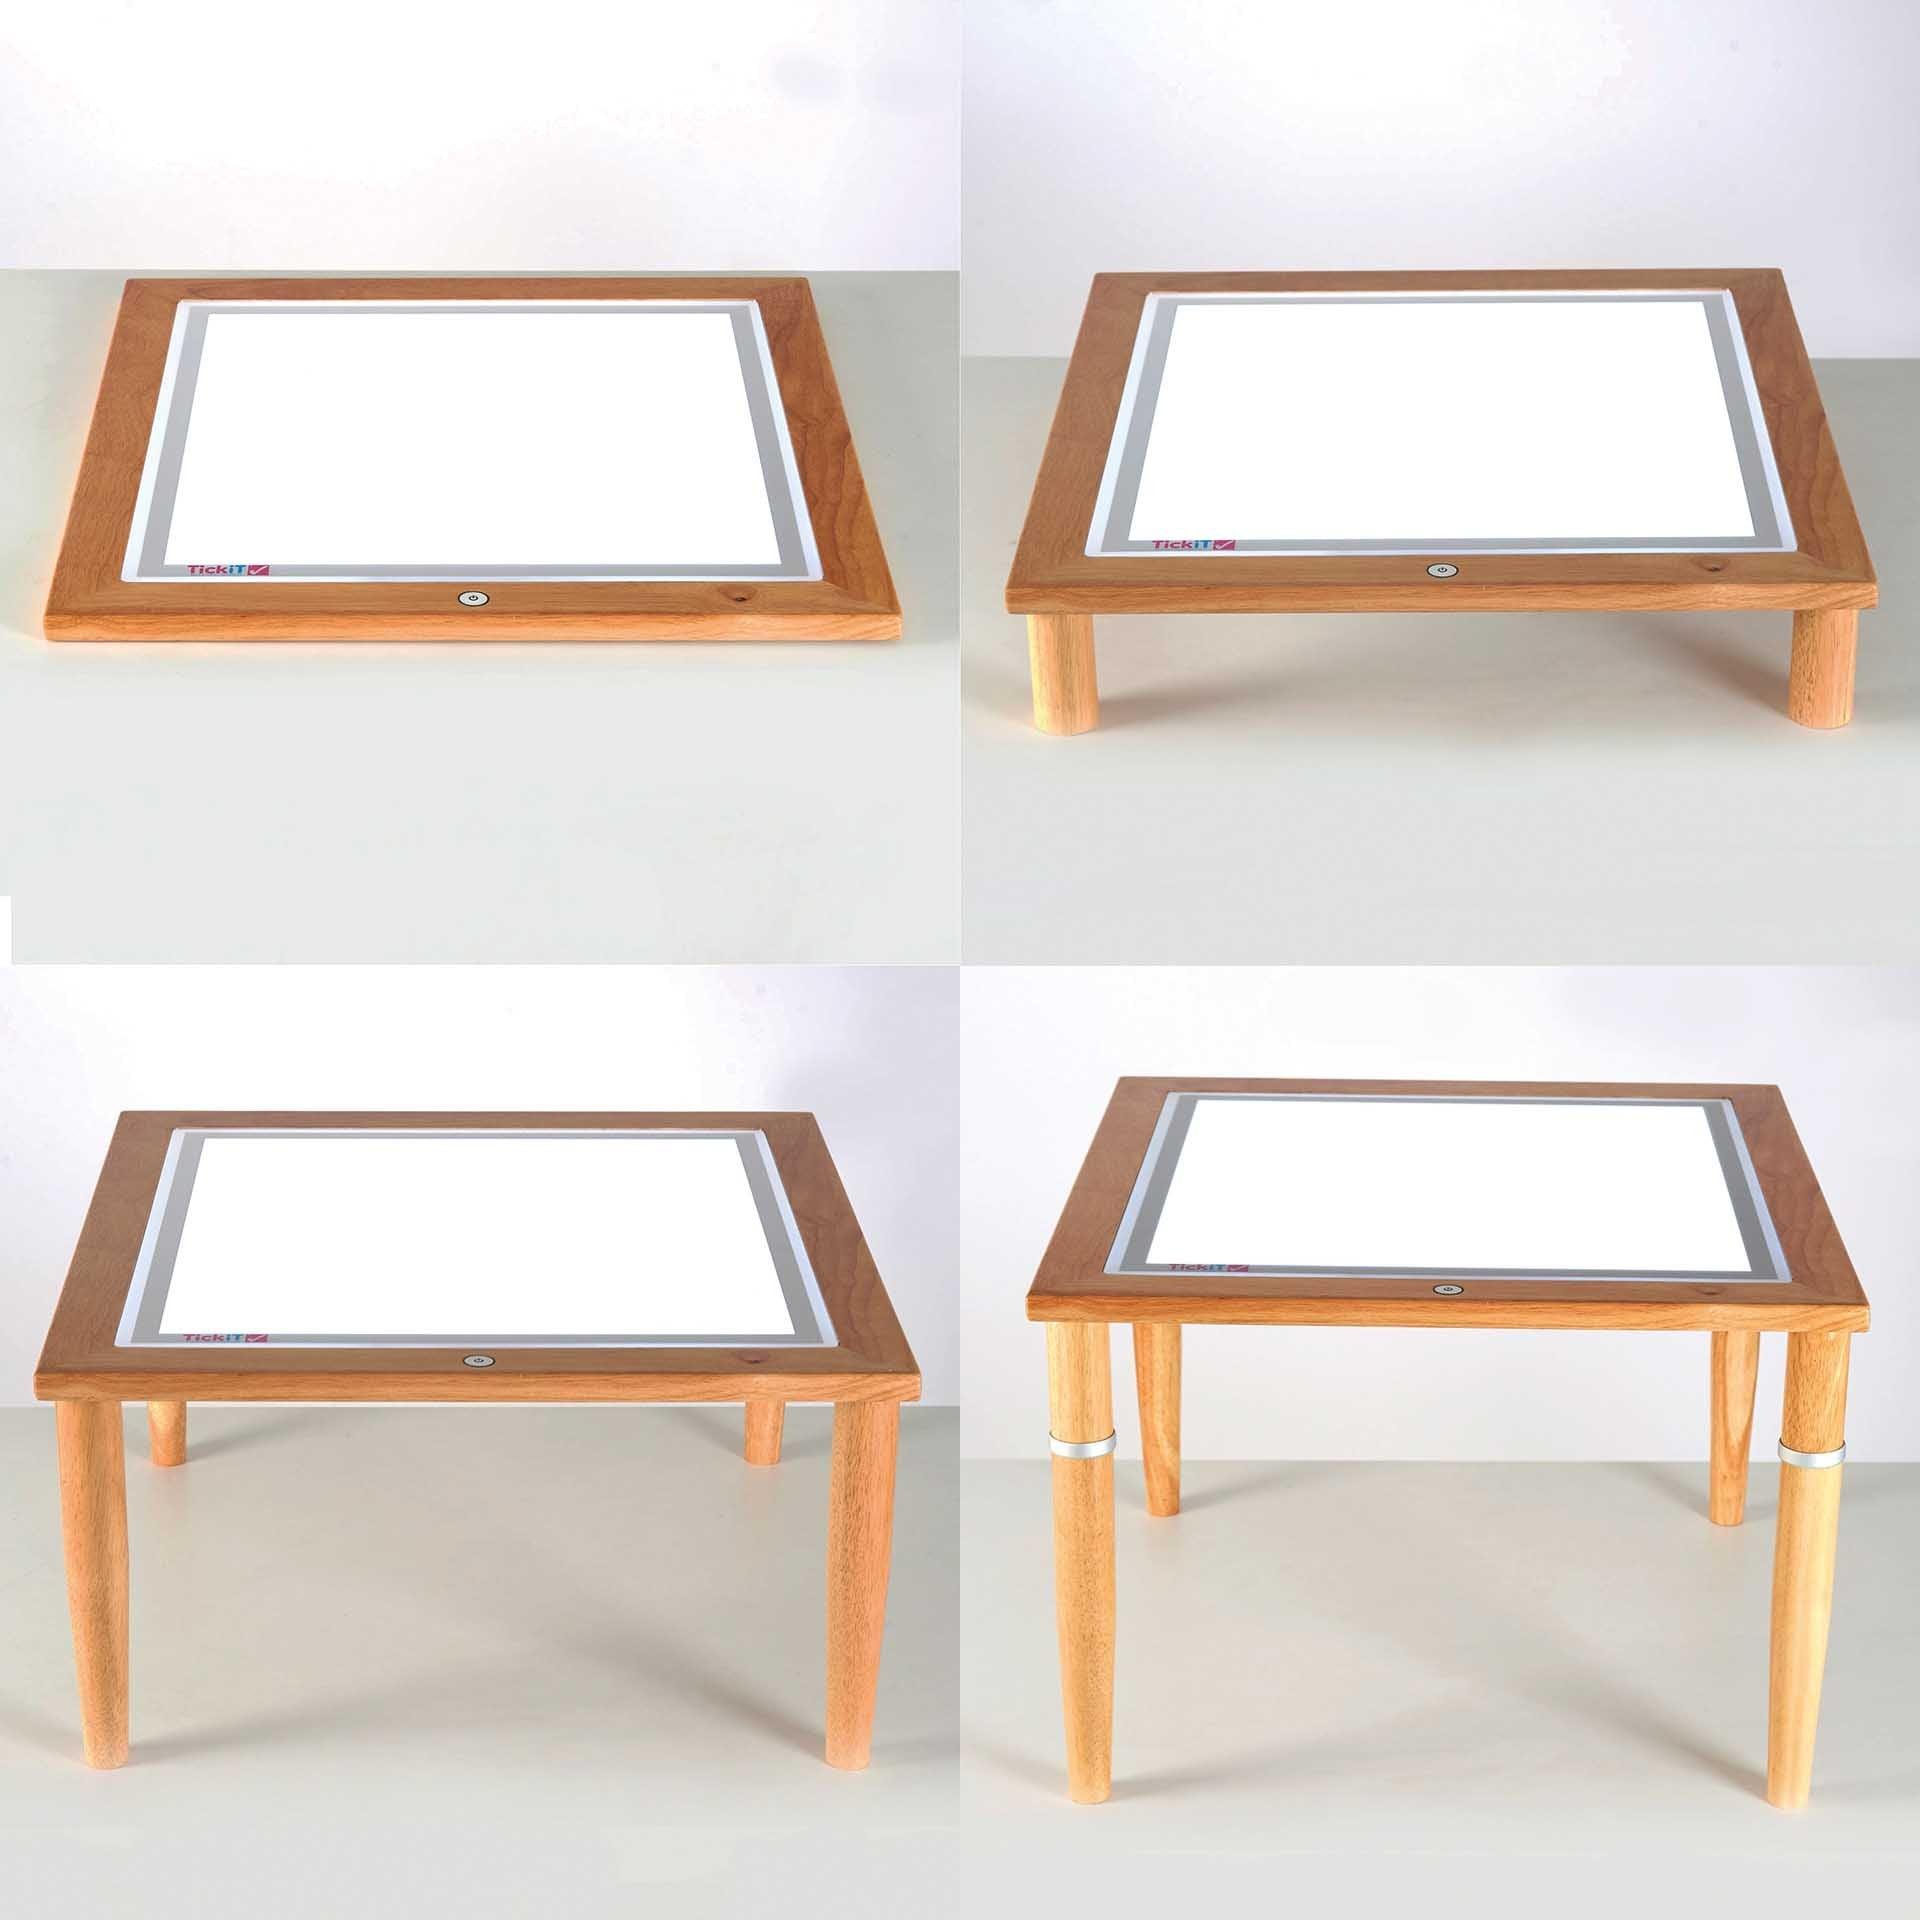  Light Table